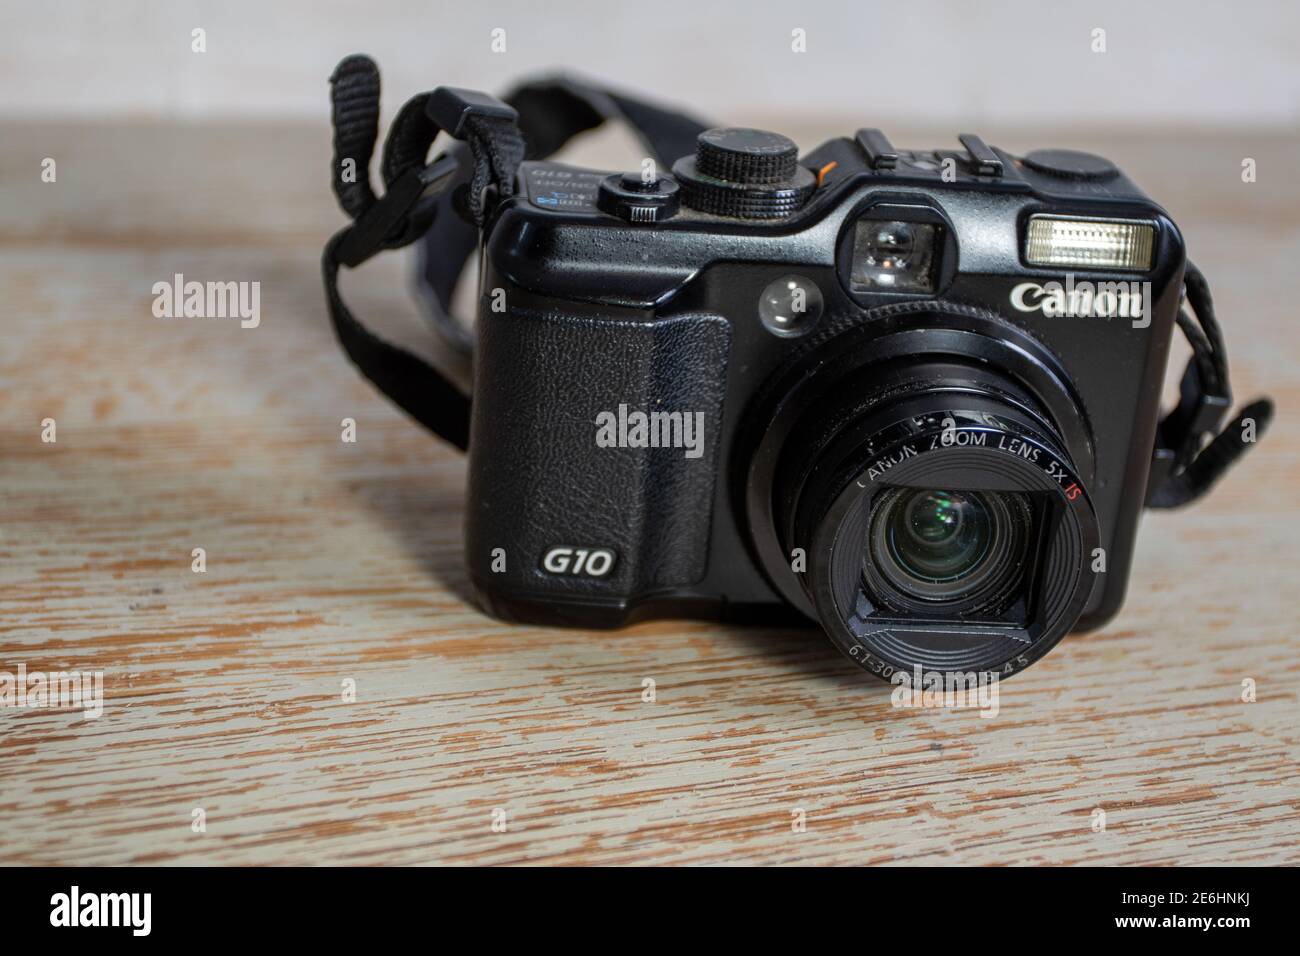 The Canon PowerShot G10 compact camera Stock Photo